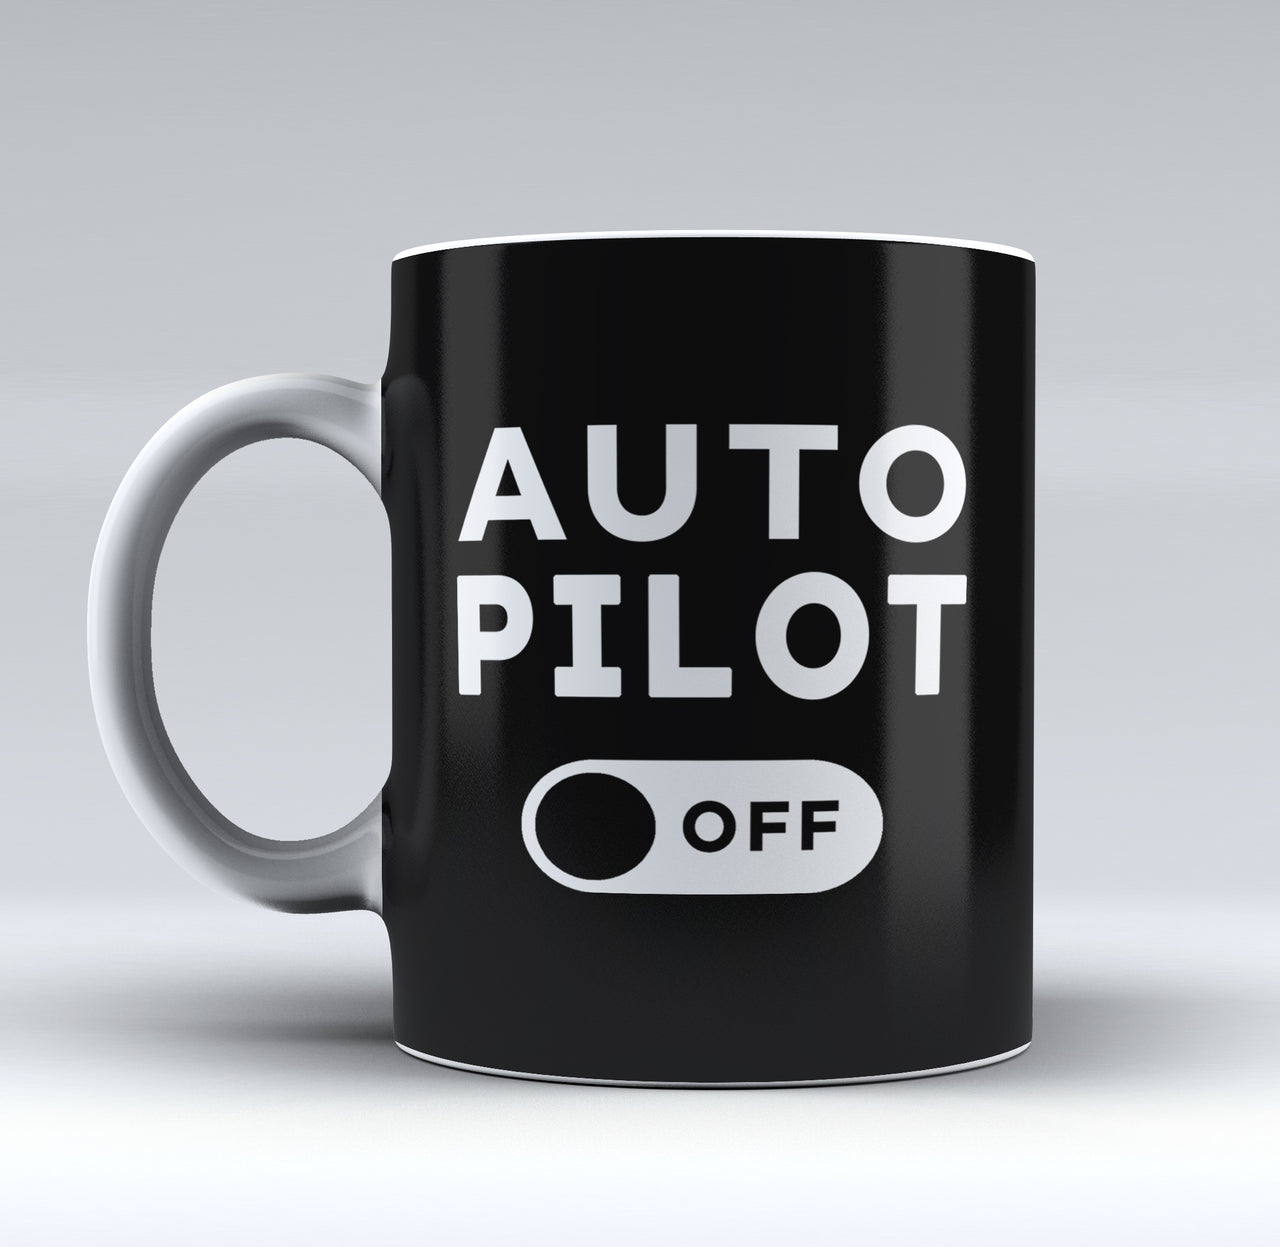 Auto Pilot Off Designed Mugs